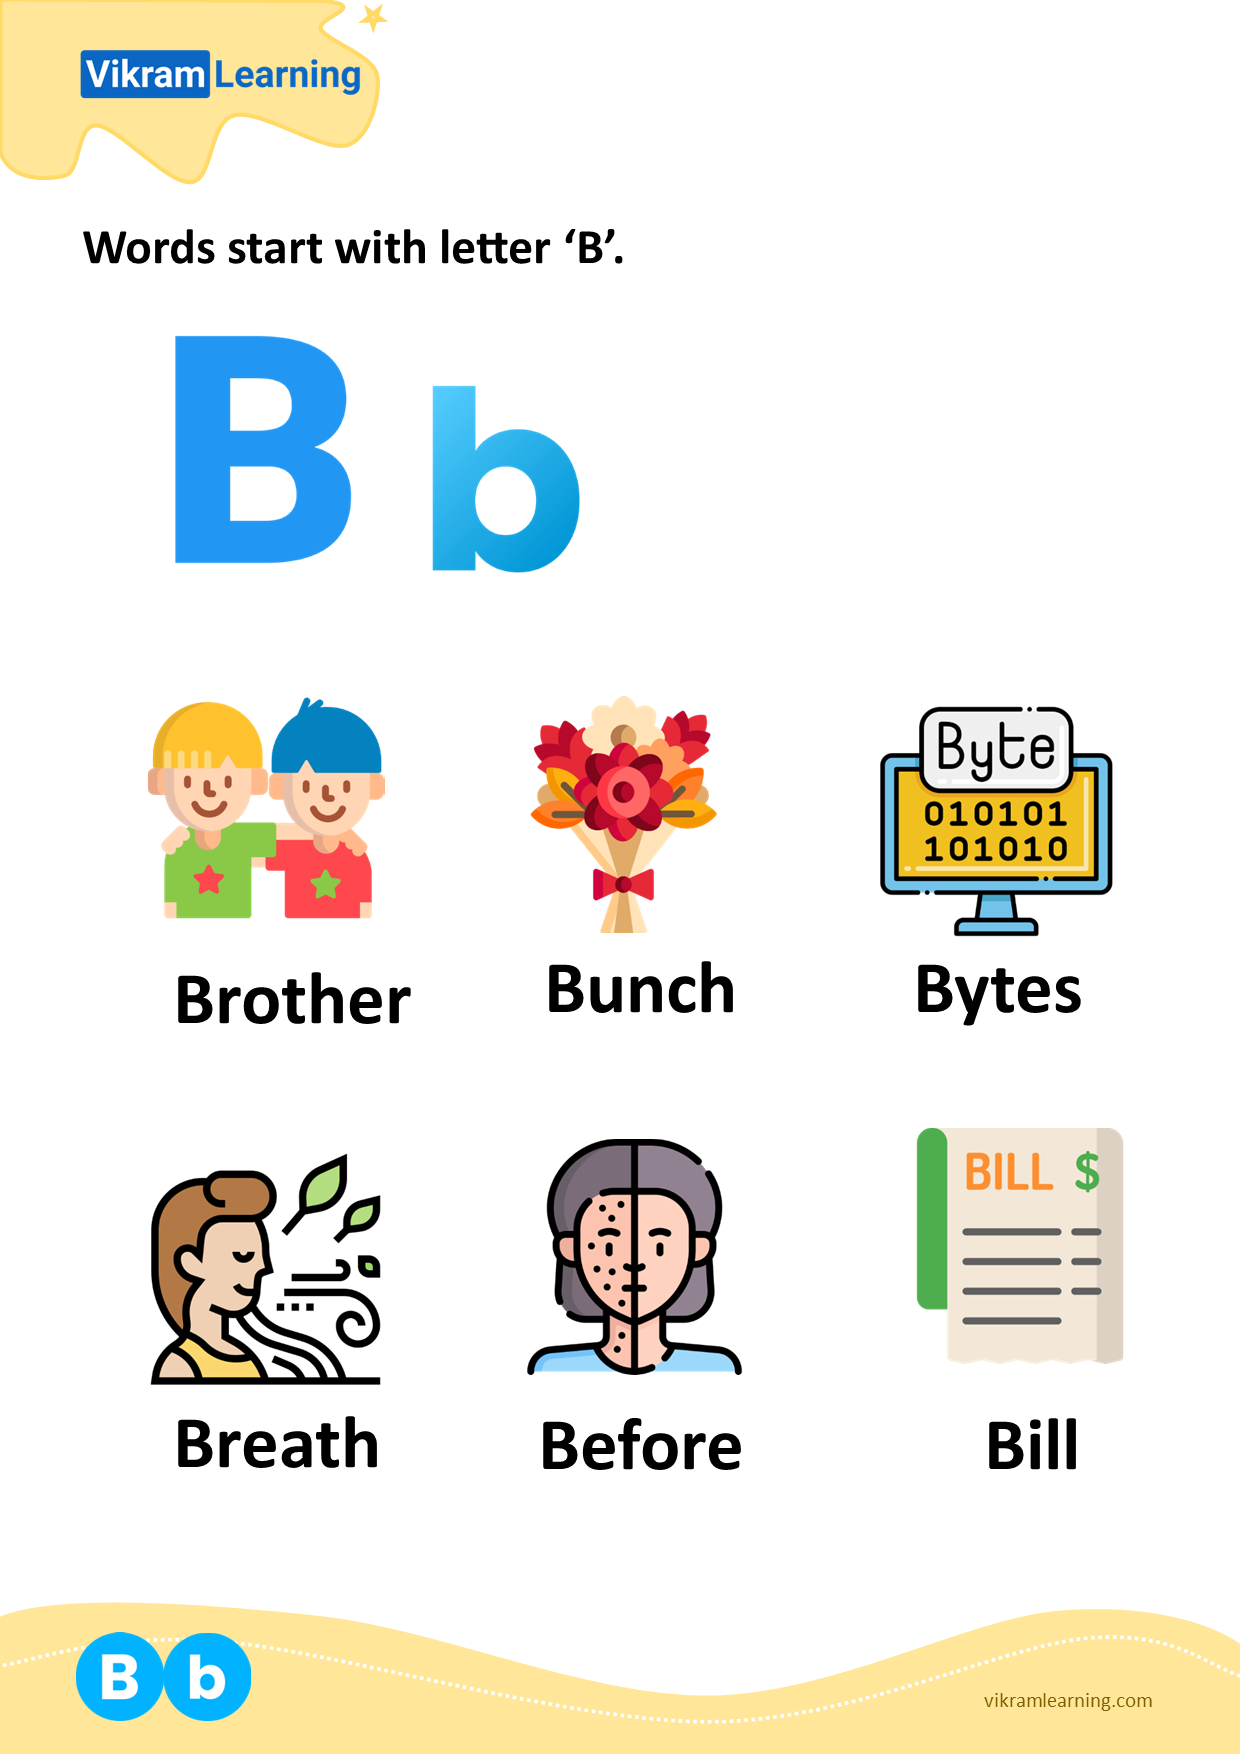 Download words start with letter 'b' worksheets